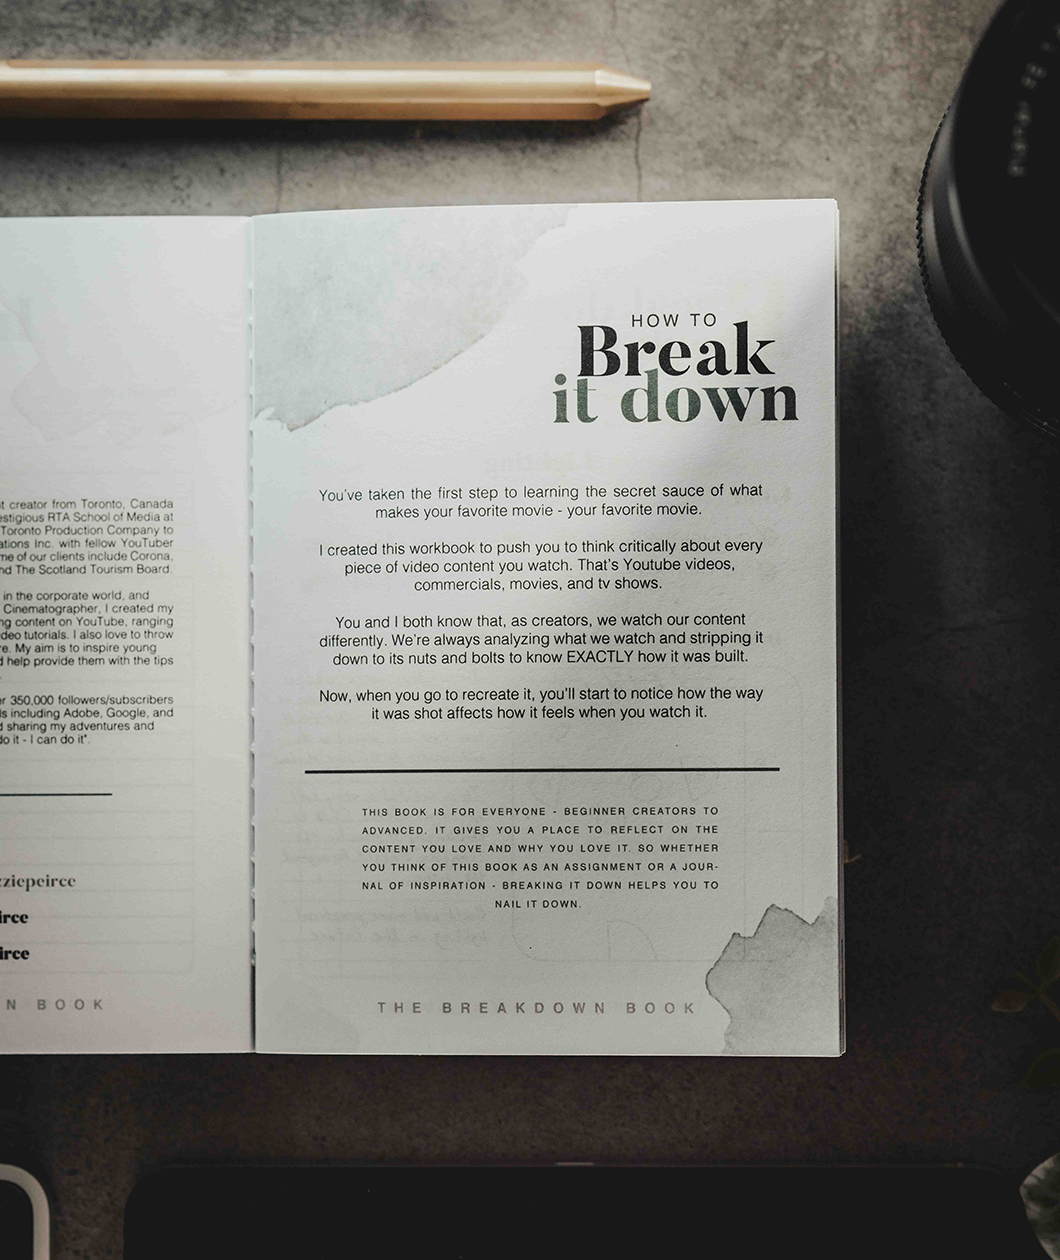 The Breakdown Book